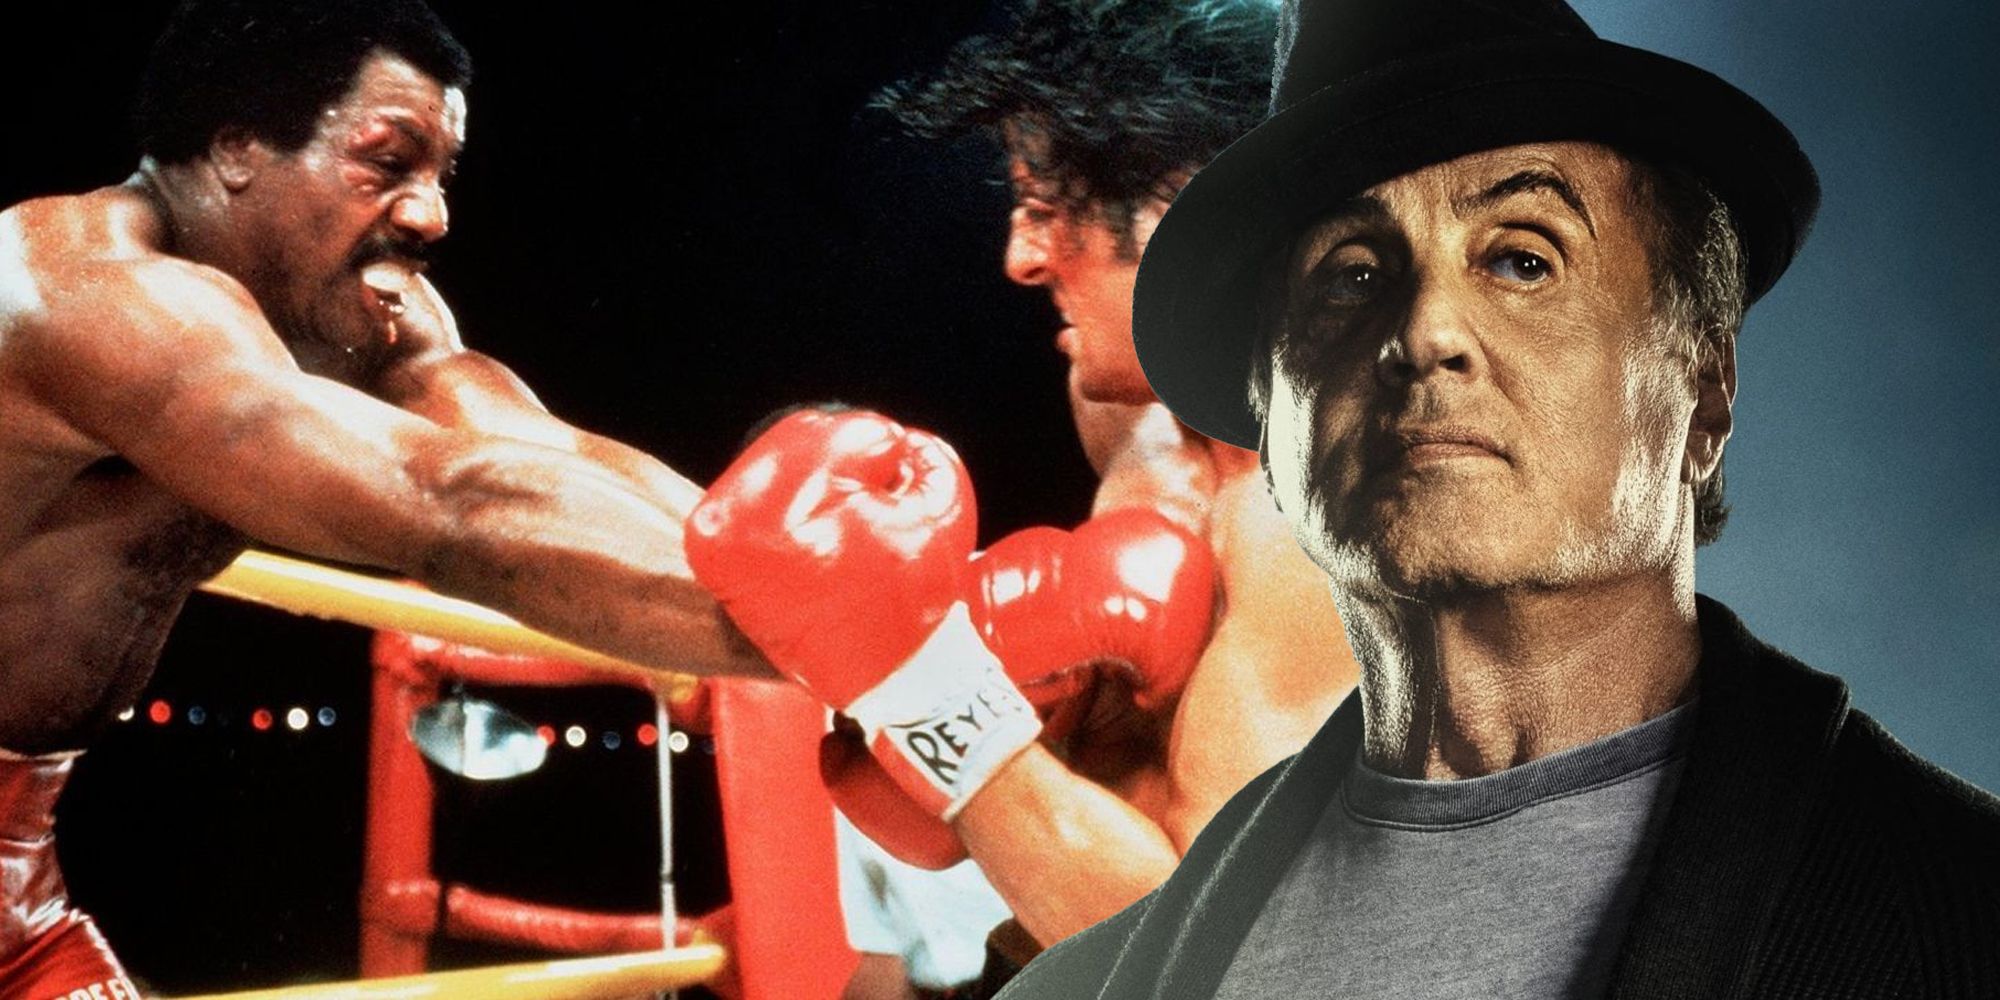 Old Rocky and Rocky vs Apollo Creed